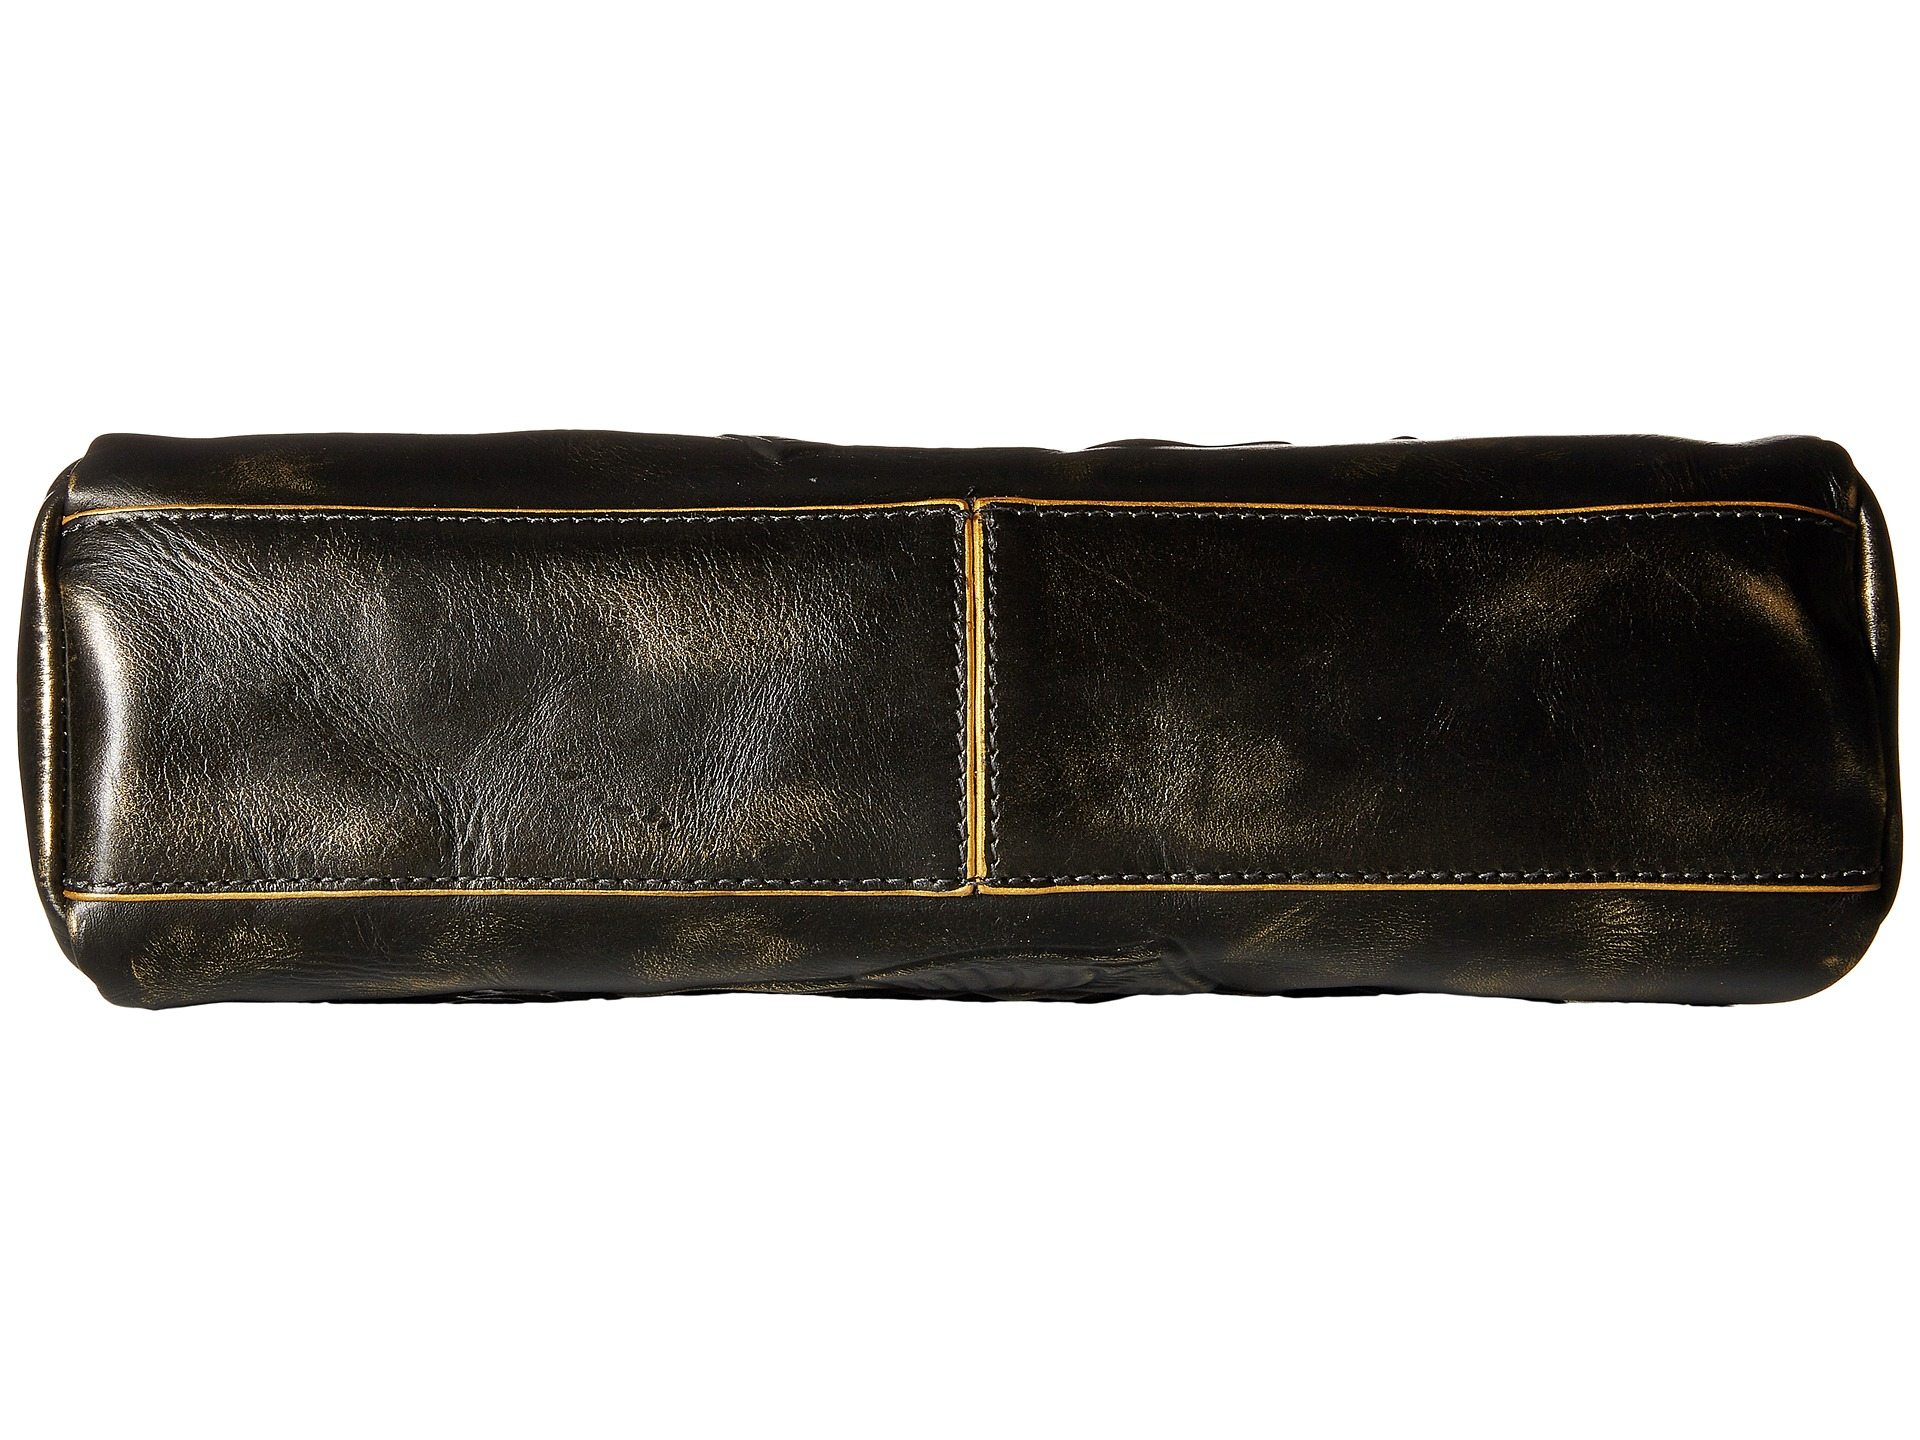 NEW Patricia Nash Tooled Leather Handbag/Purse - Style P532208 - Glitter  Rose